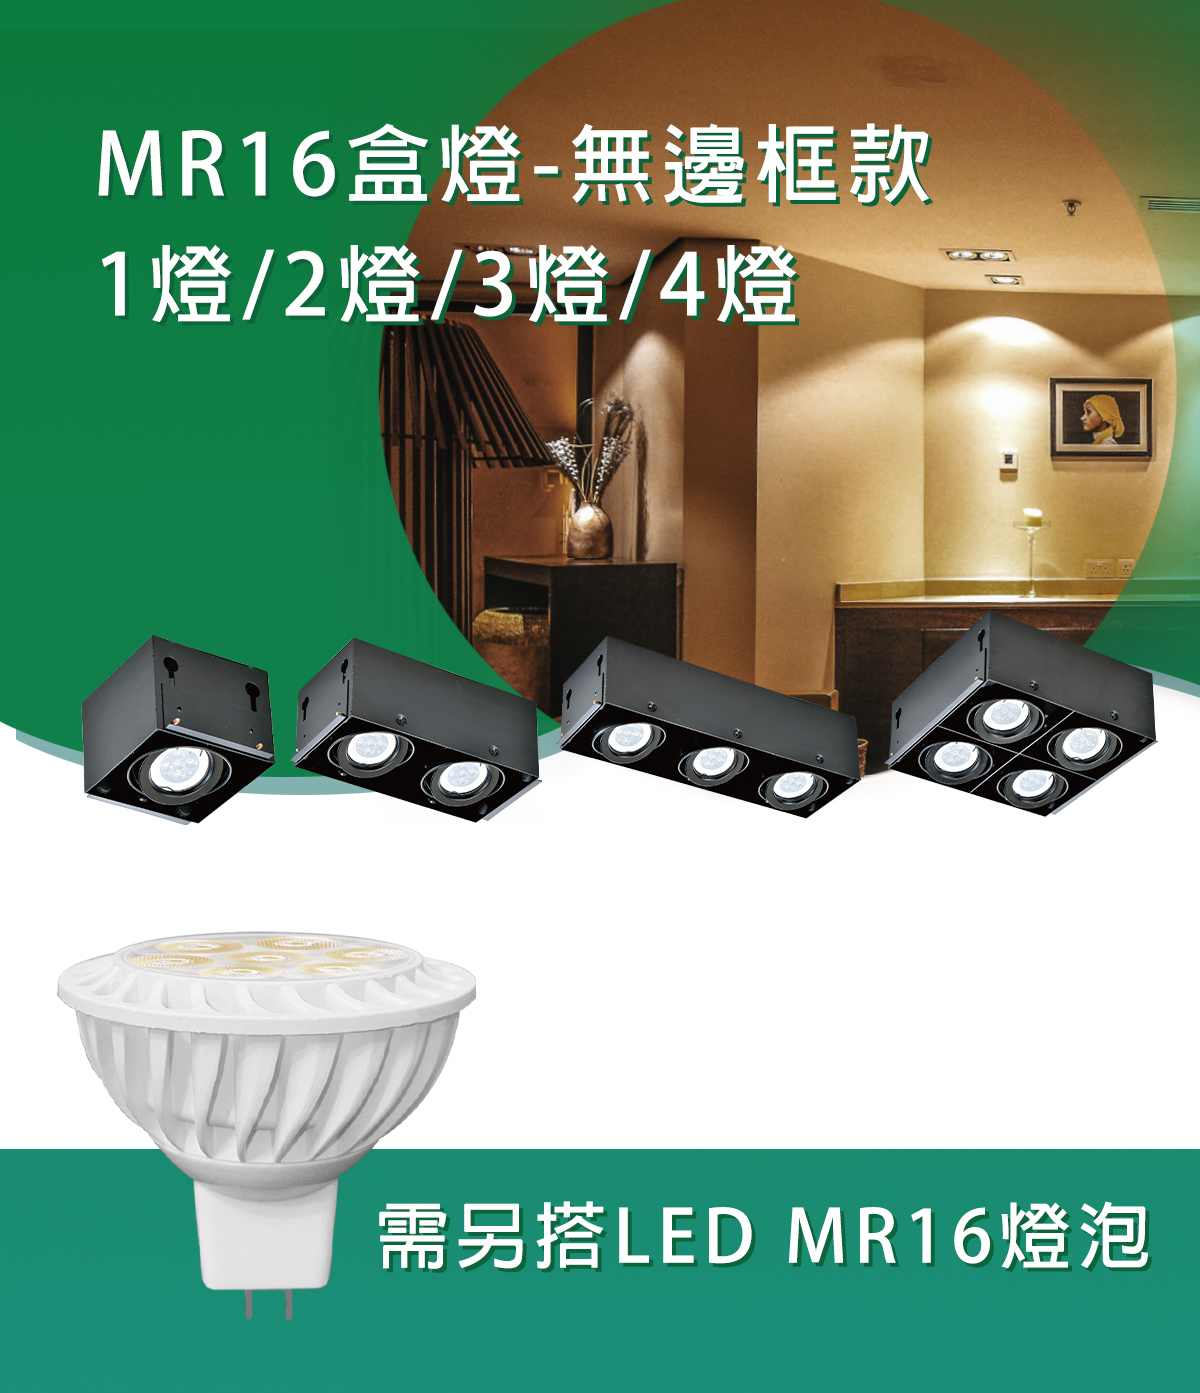 【KAO'S】LED MR16無邊框盒燈 1燈 2燈 3燈 4燈 MR16燈泡另計